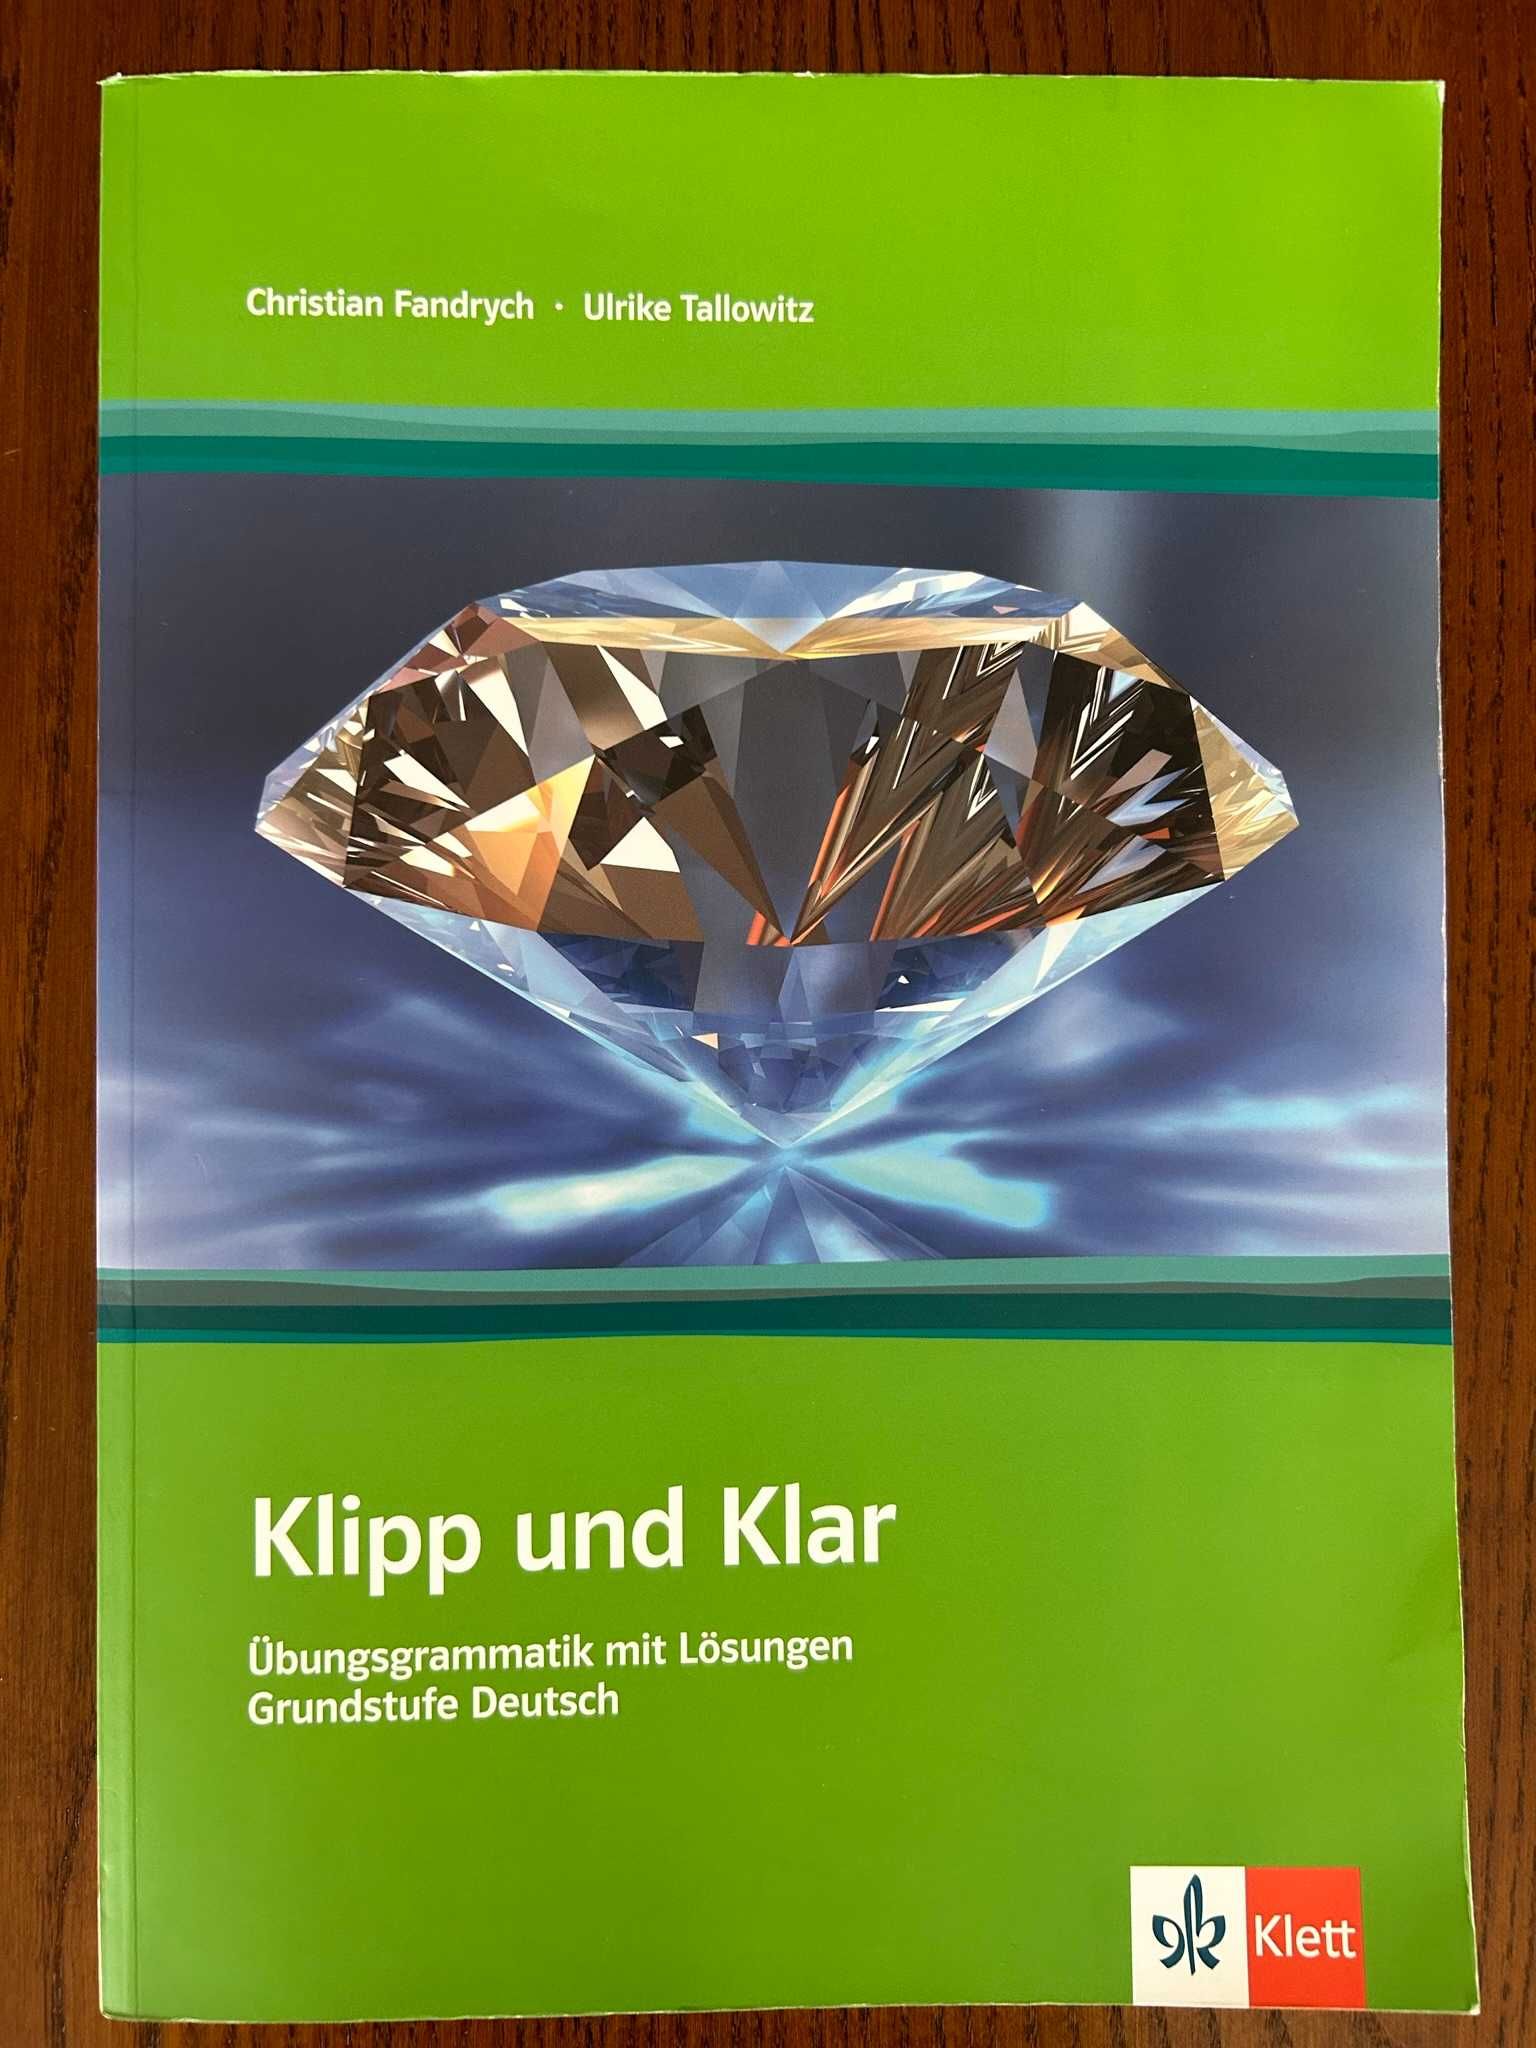 Учебници по немски (Klipp und Klar, Sky Print)